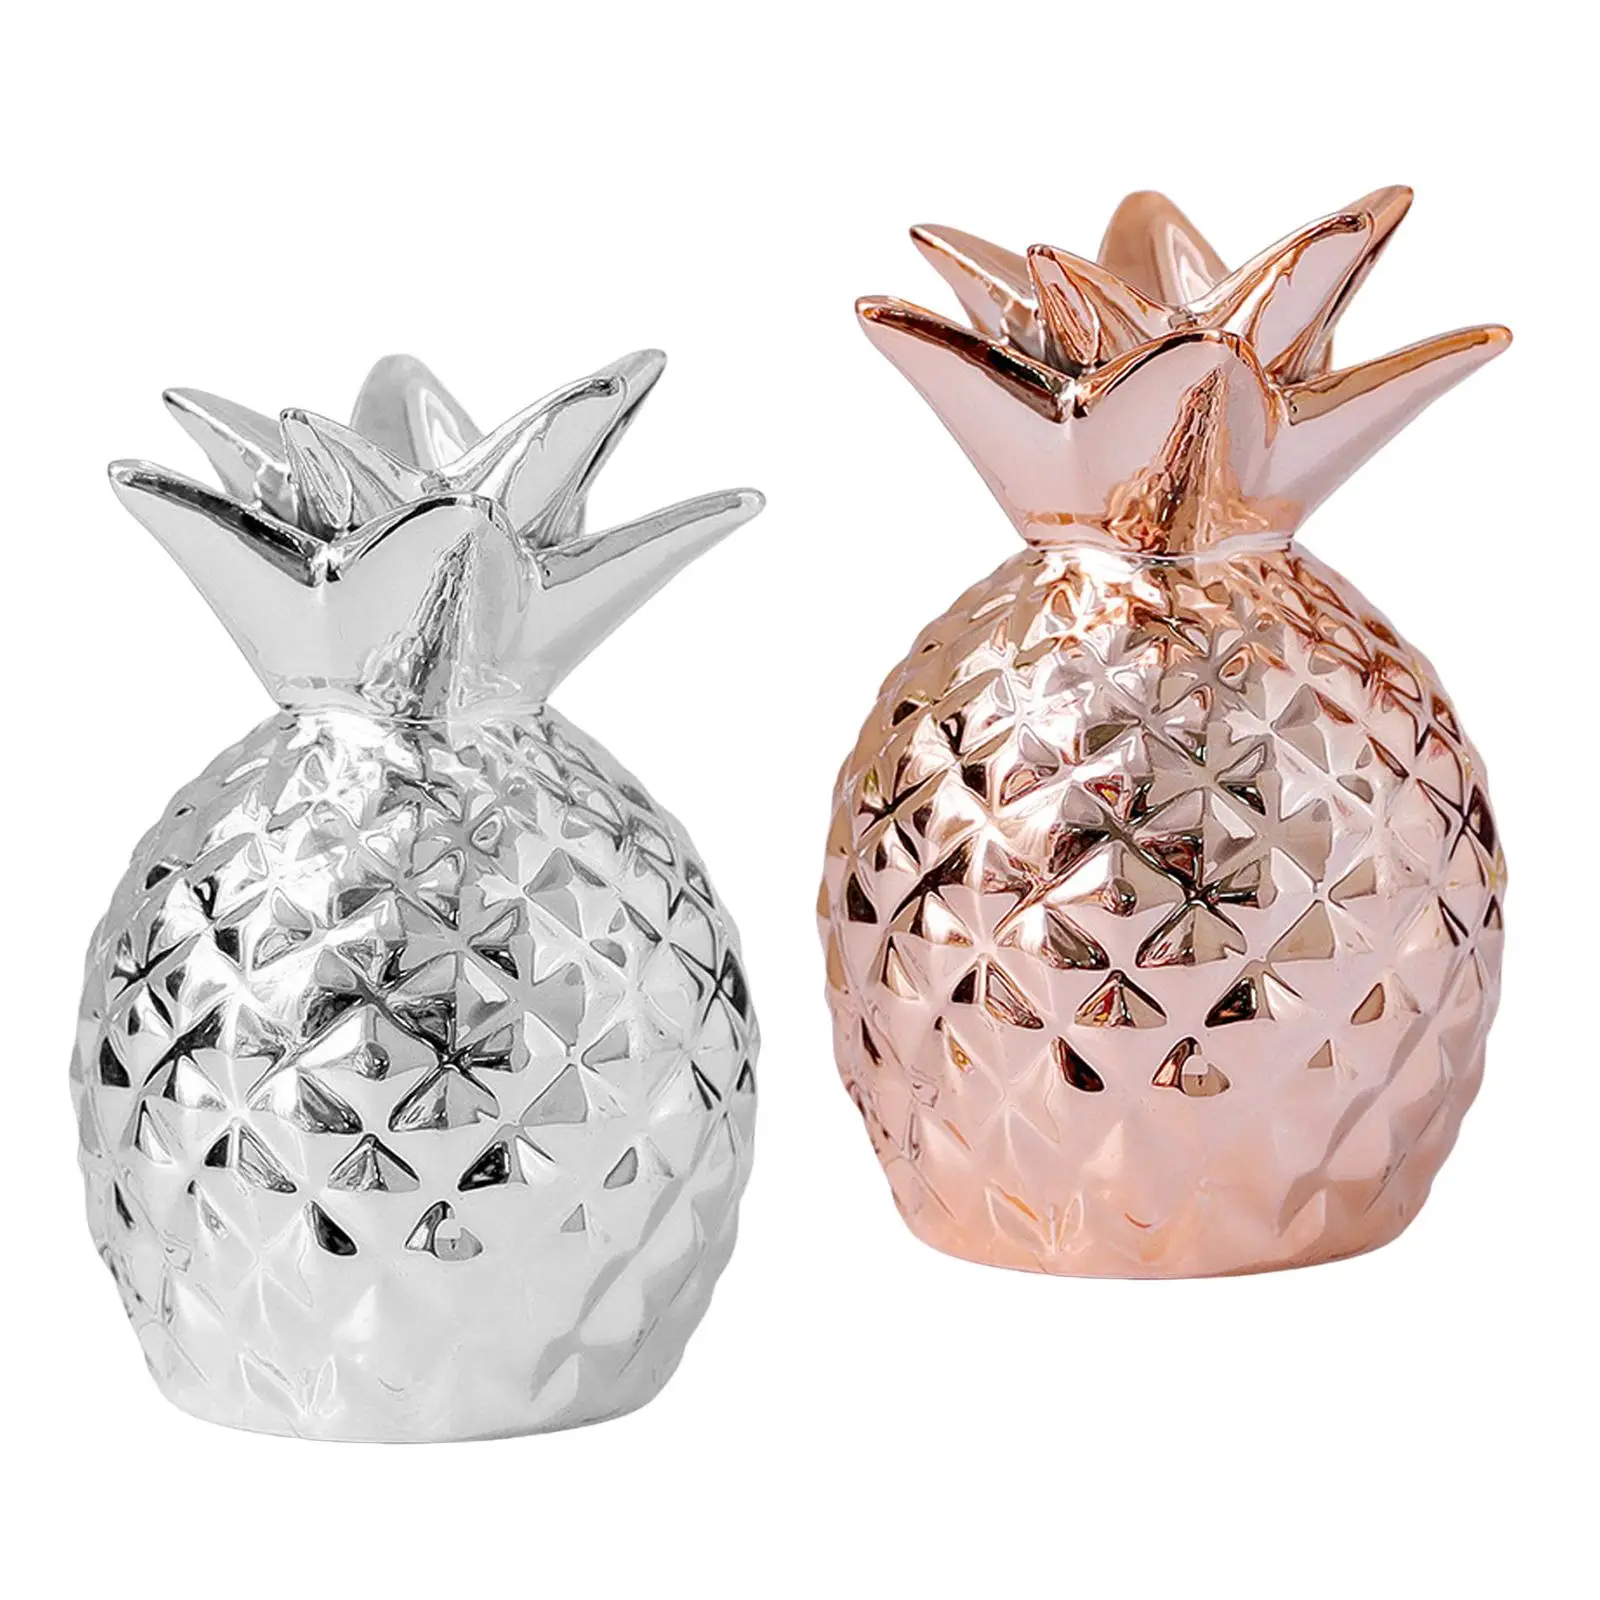 Ceramic Holder Saving box Decoration Cute Decorative Figurine Ornaments Pineapple Shape Money Box for Bedroom Office